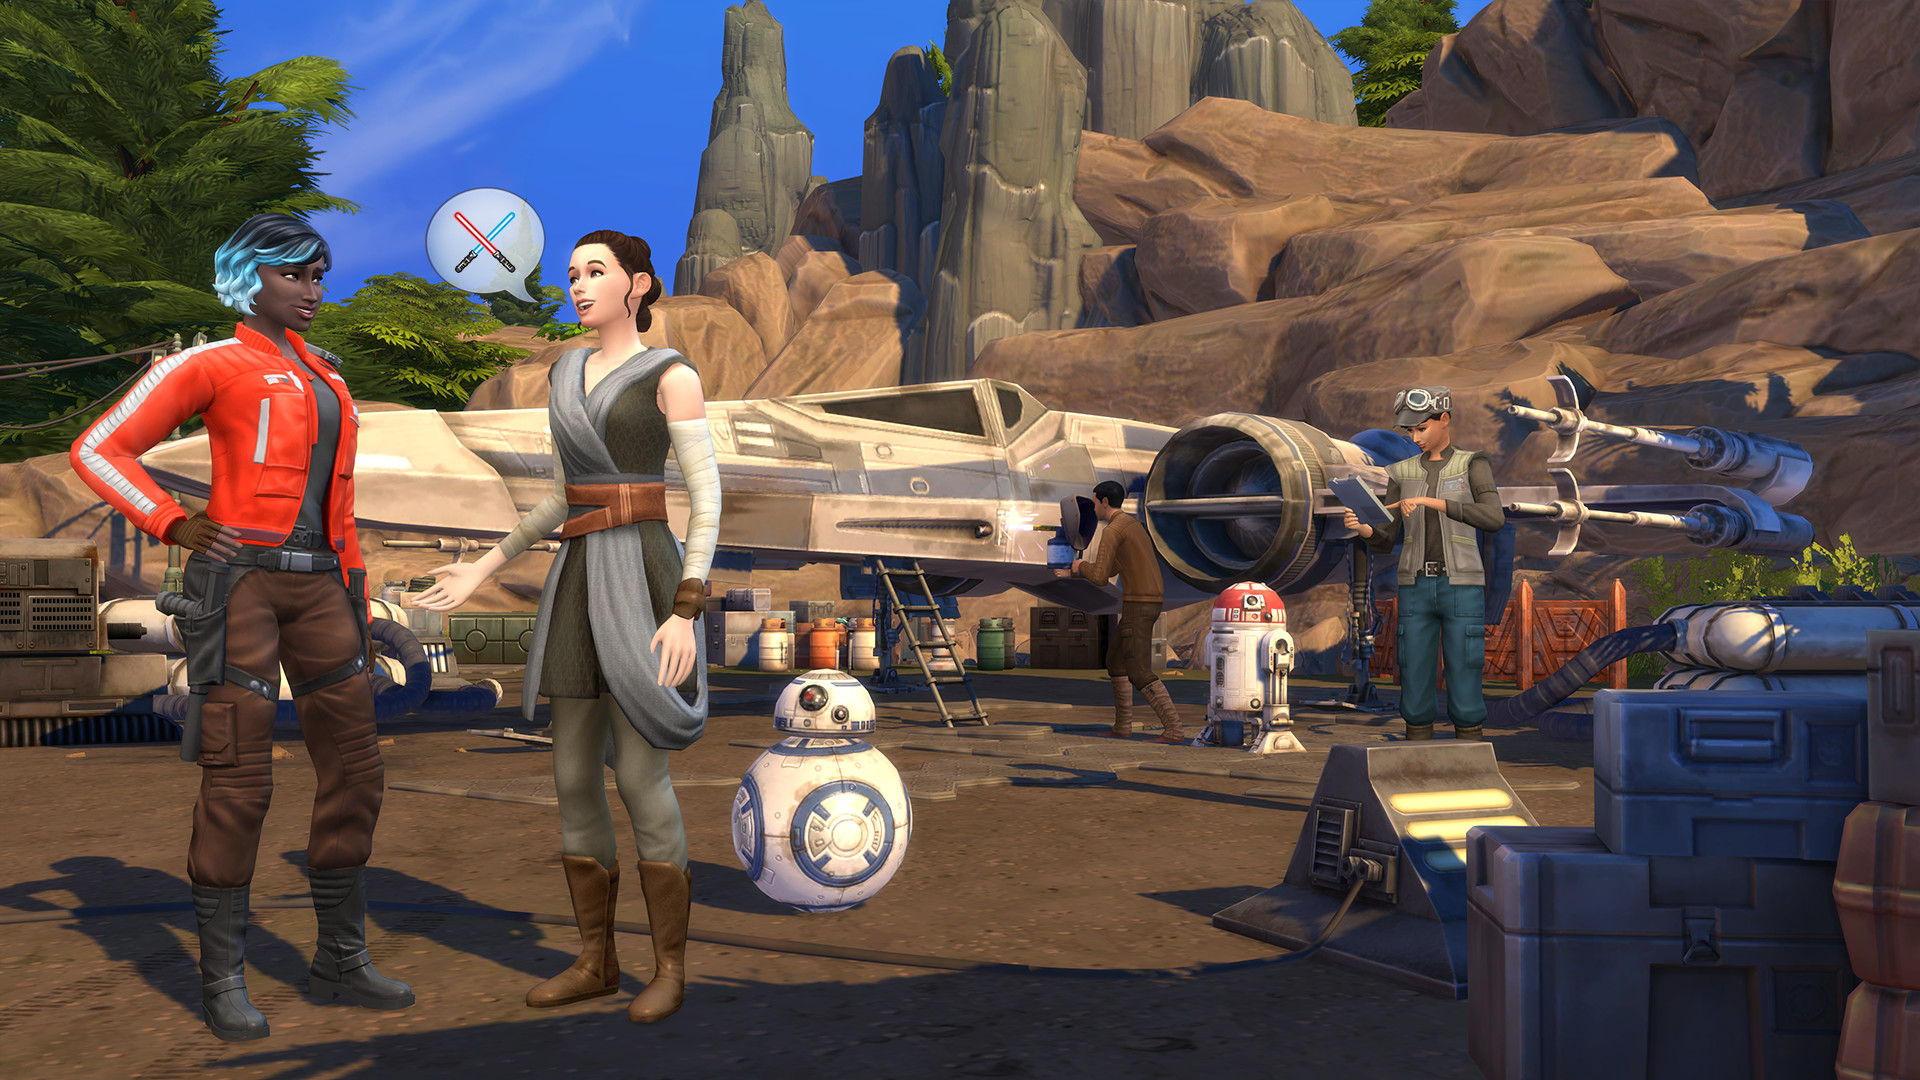 The Sims 4 Star Wars: Journey to Batuu Game Pack screenshot